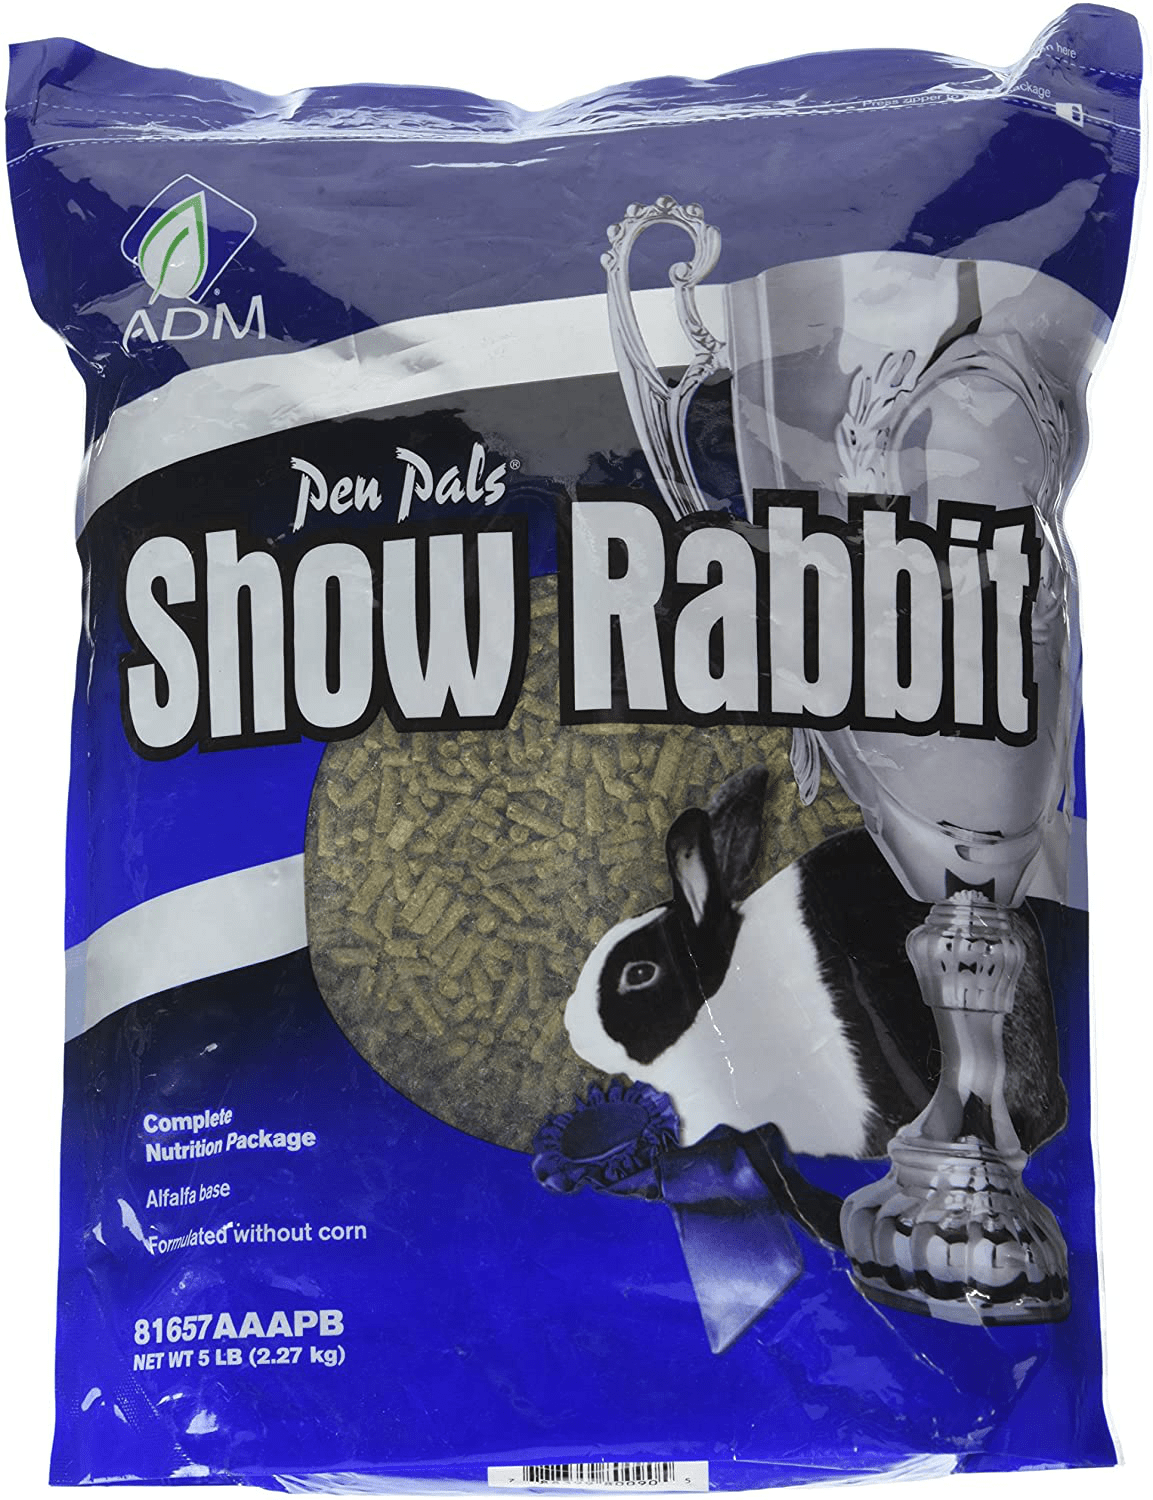 Adm Animal Nutrition 81657Aaapb 5 Lb Show Rabbit Feed, 1 Count